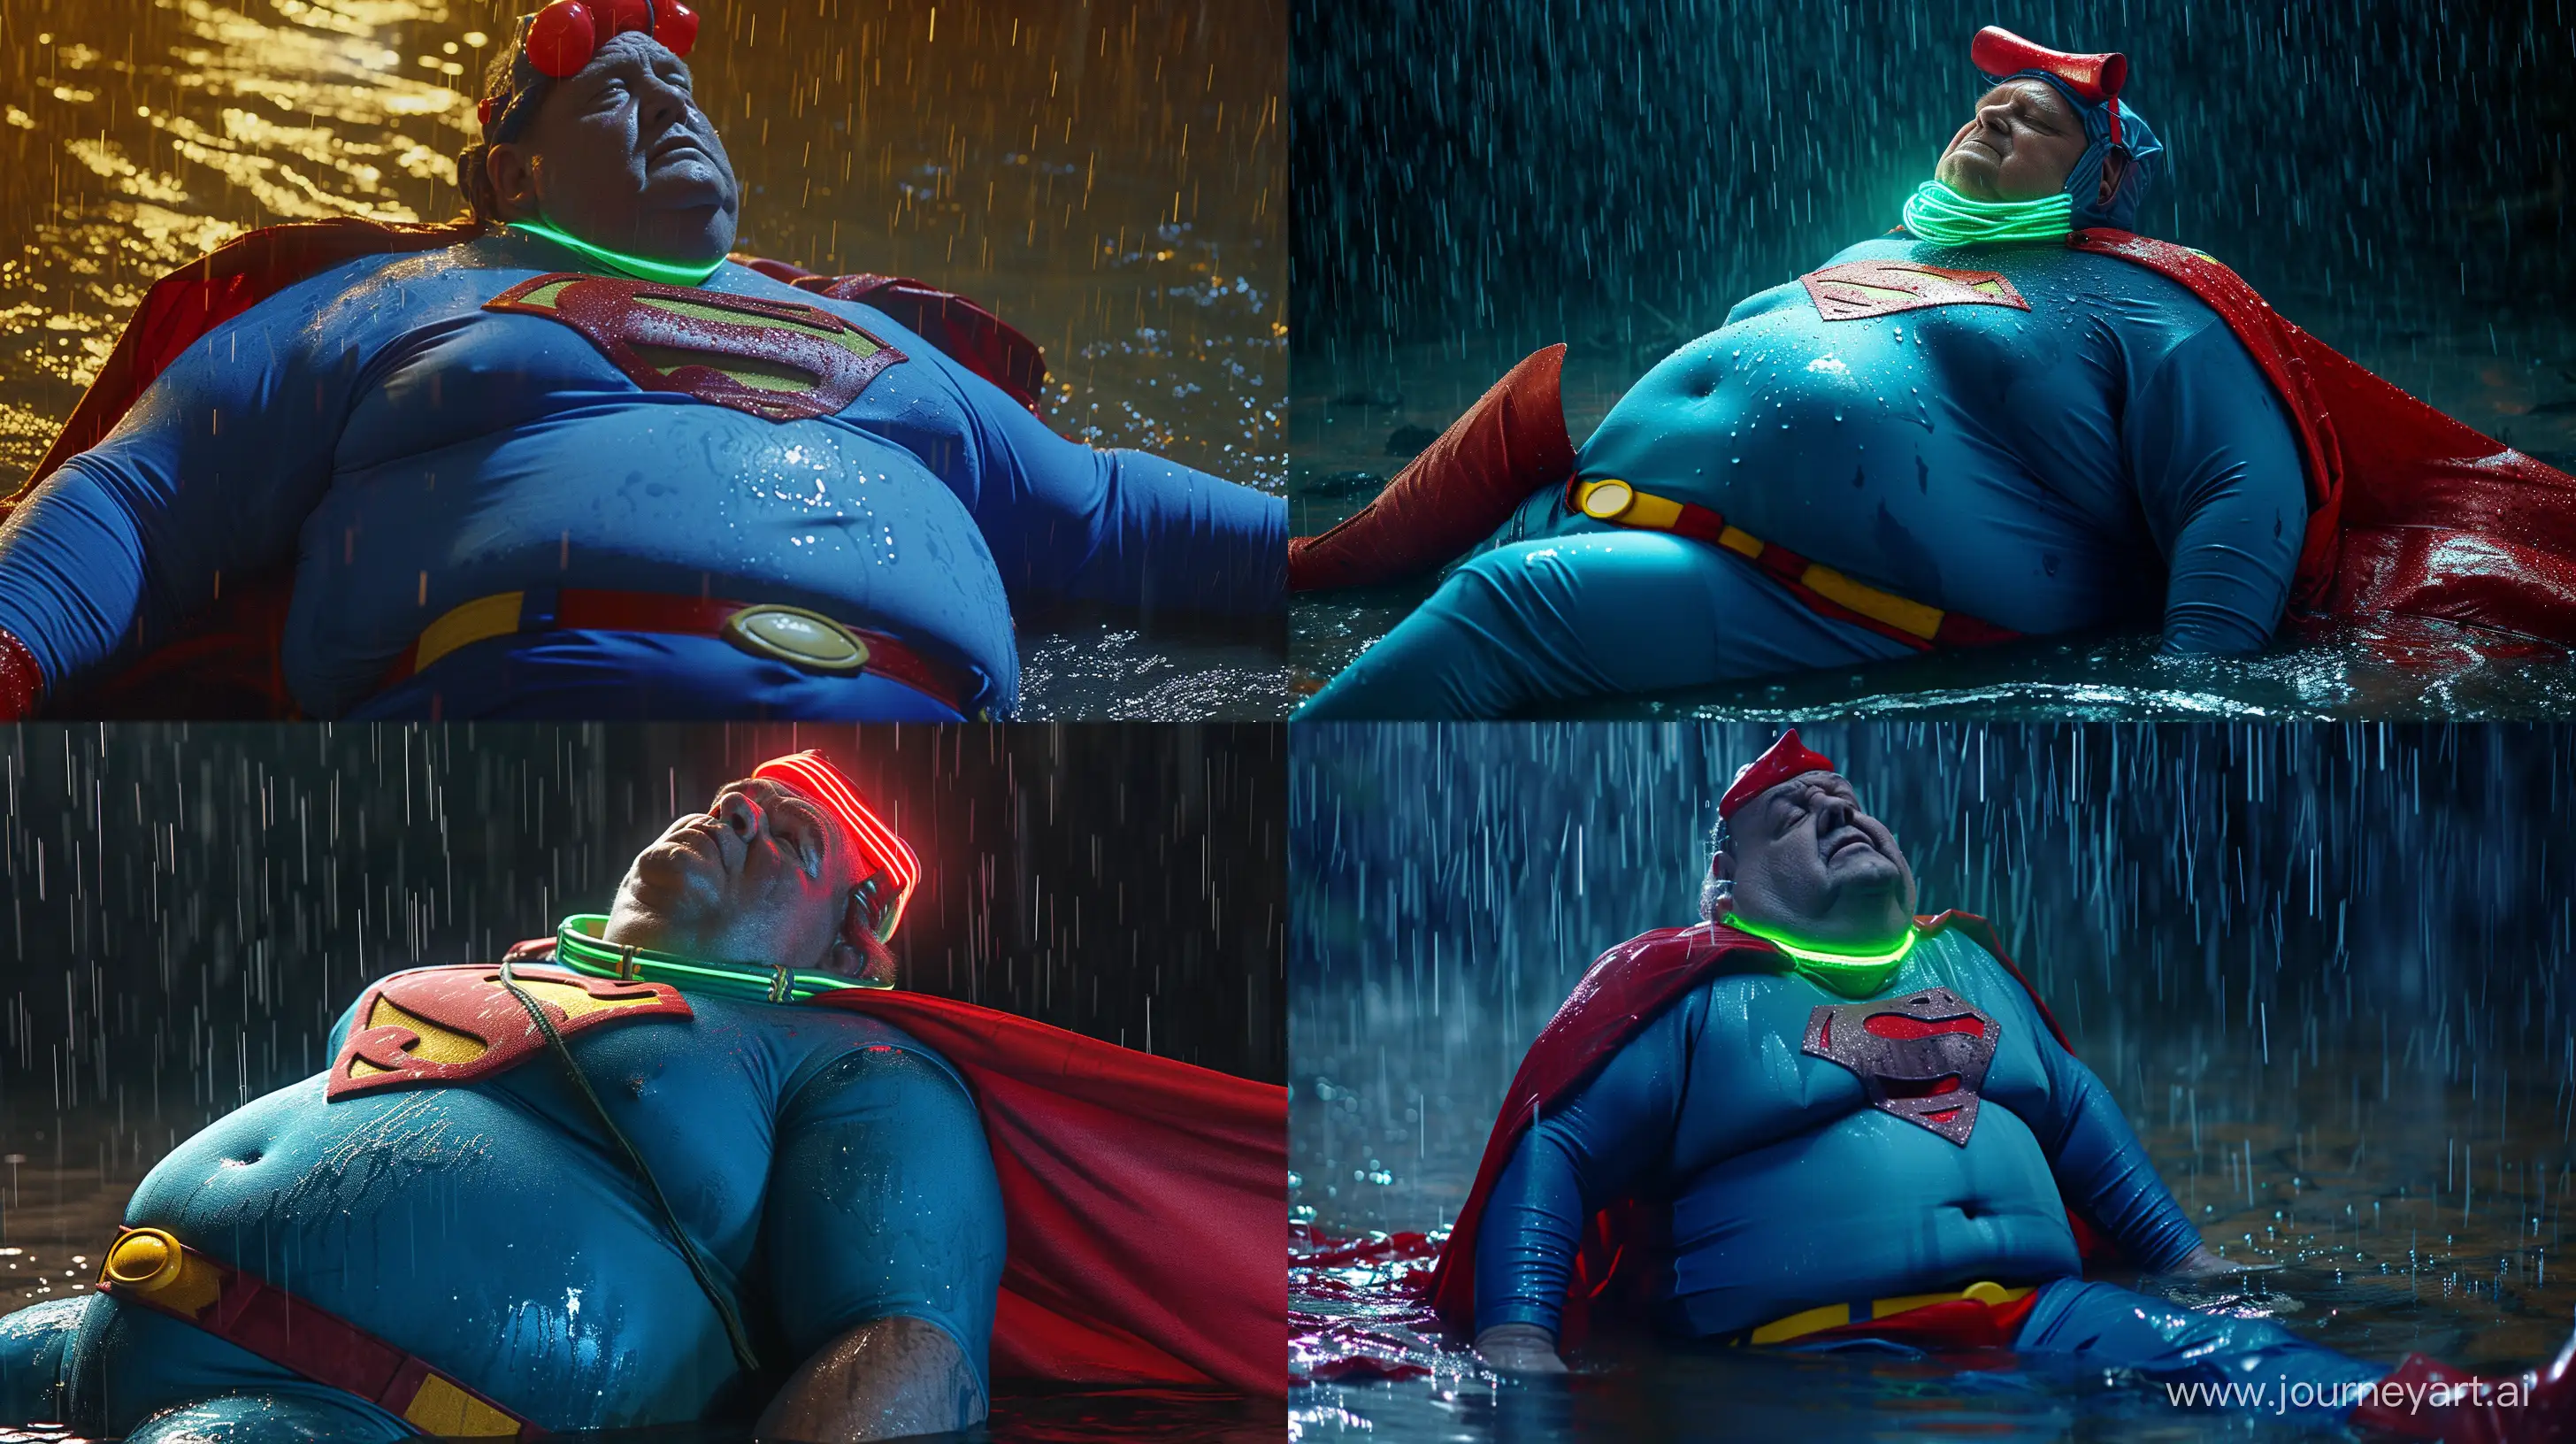 Elderly-Superman-Enjoys-Rainy-Serenity-by-the-River